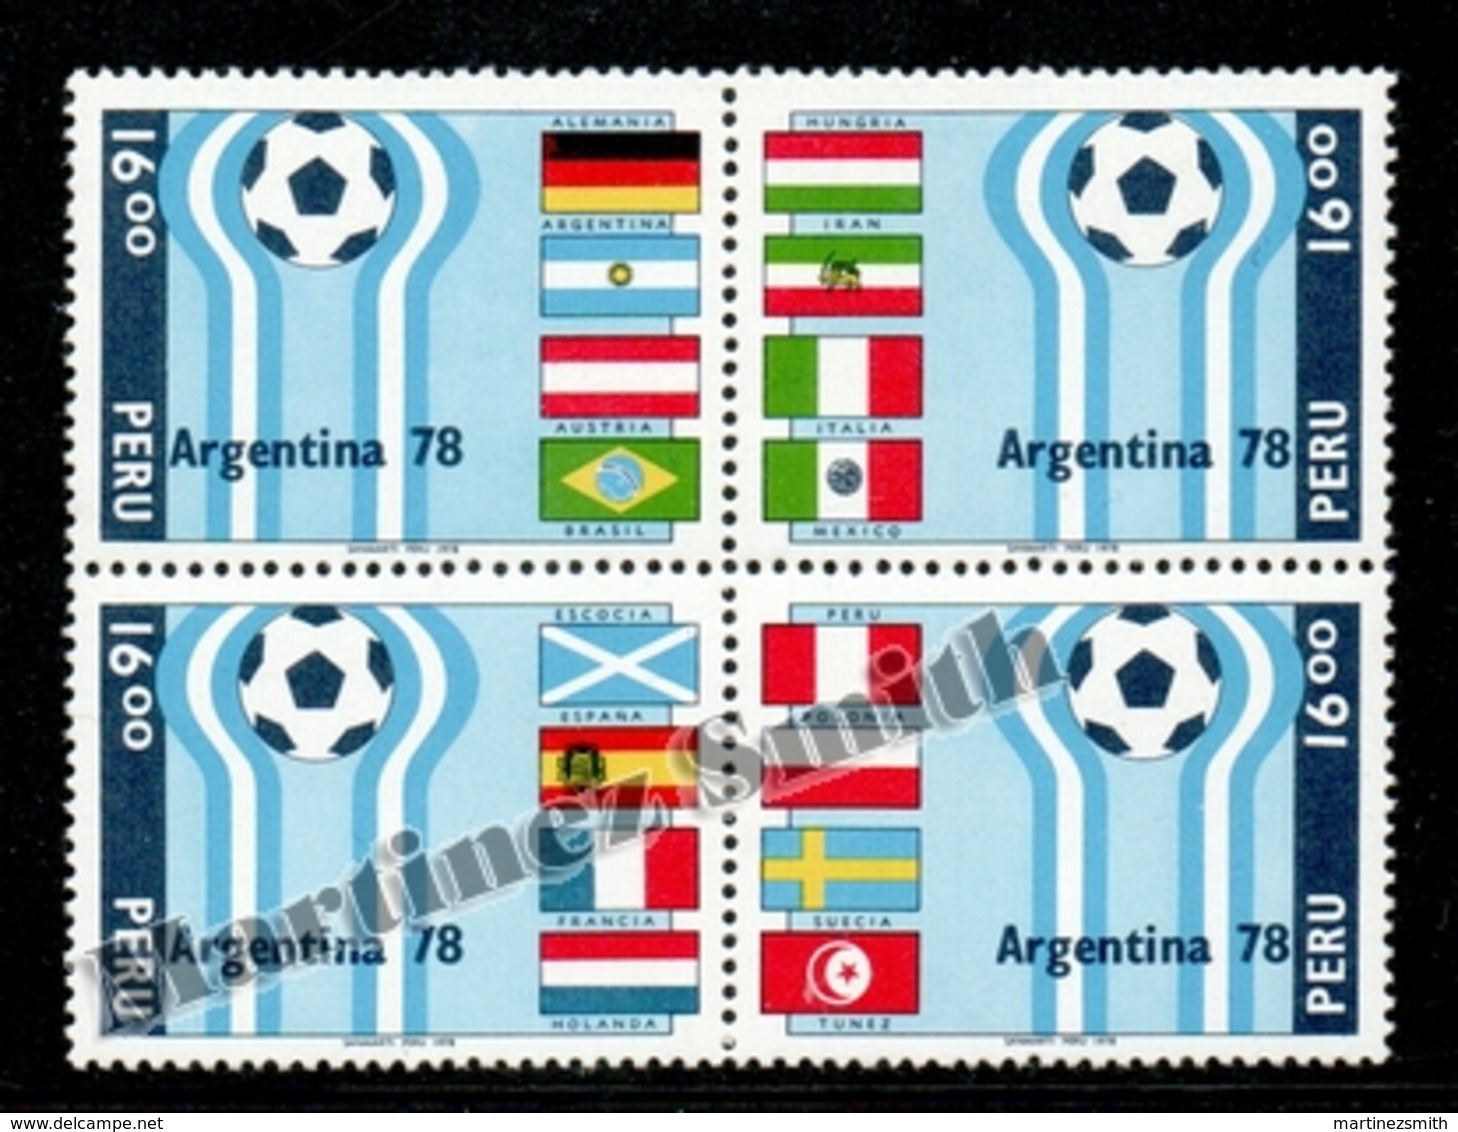 Peru - Perou 1978 Yvert 630-33, Football World Cup Argentina 78 - MNH - Perú